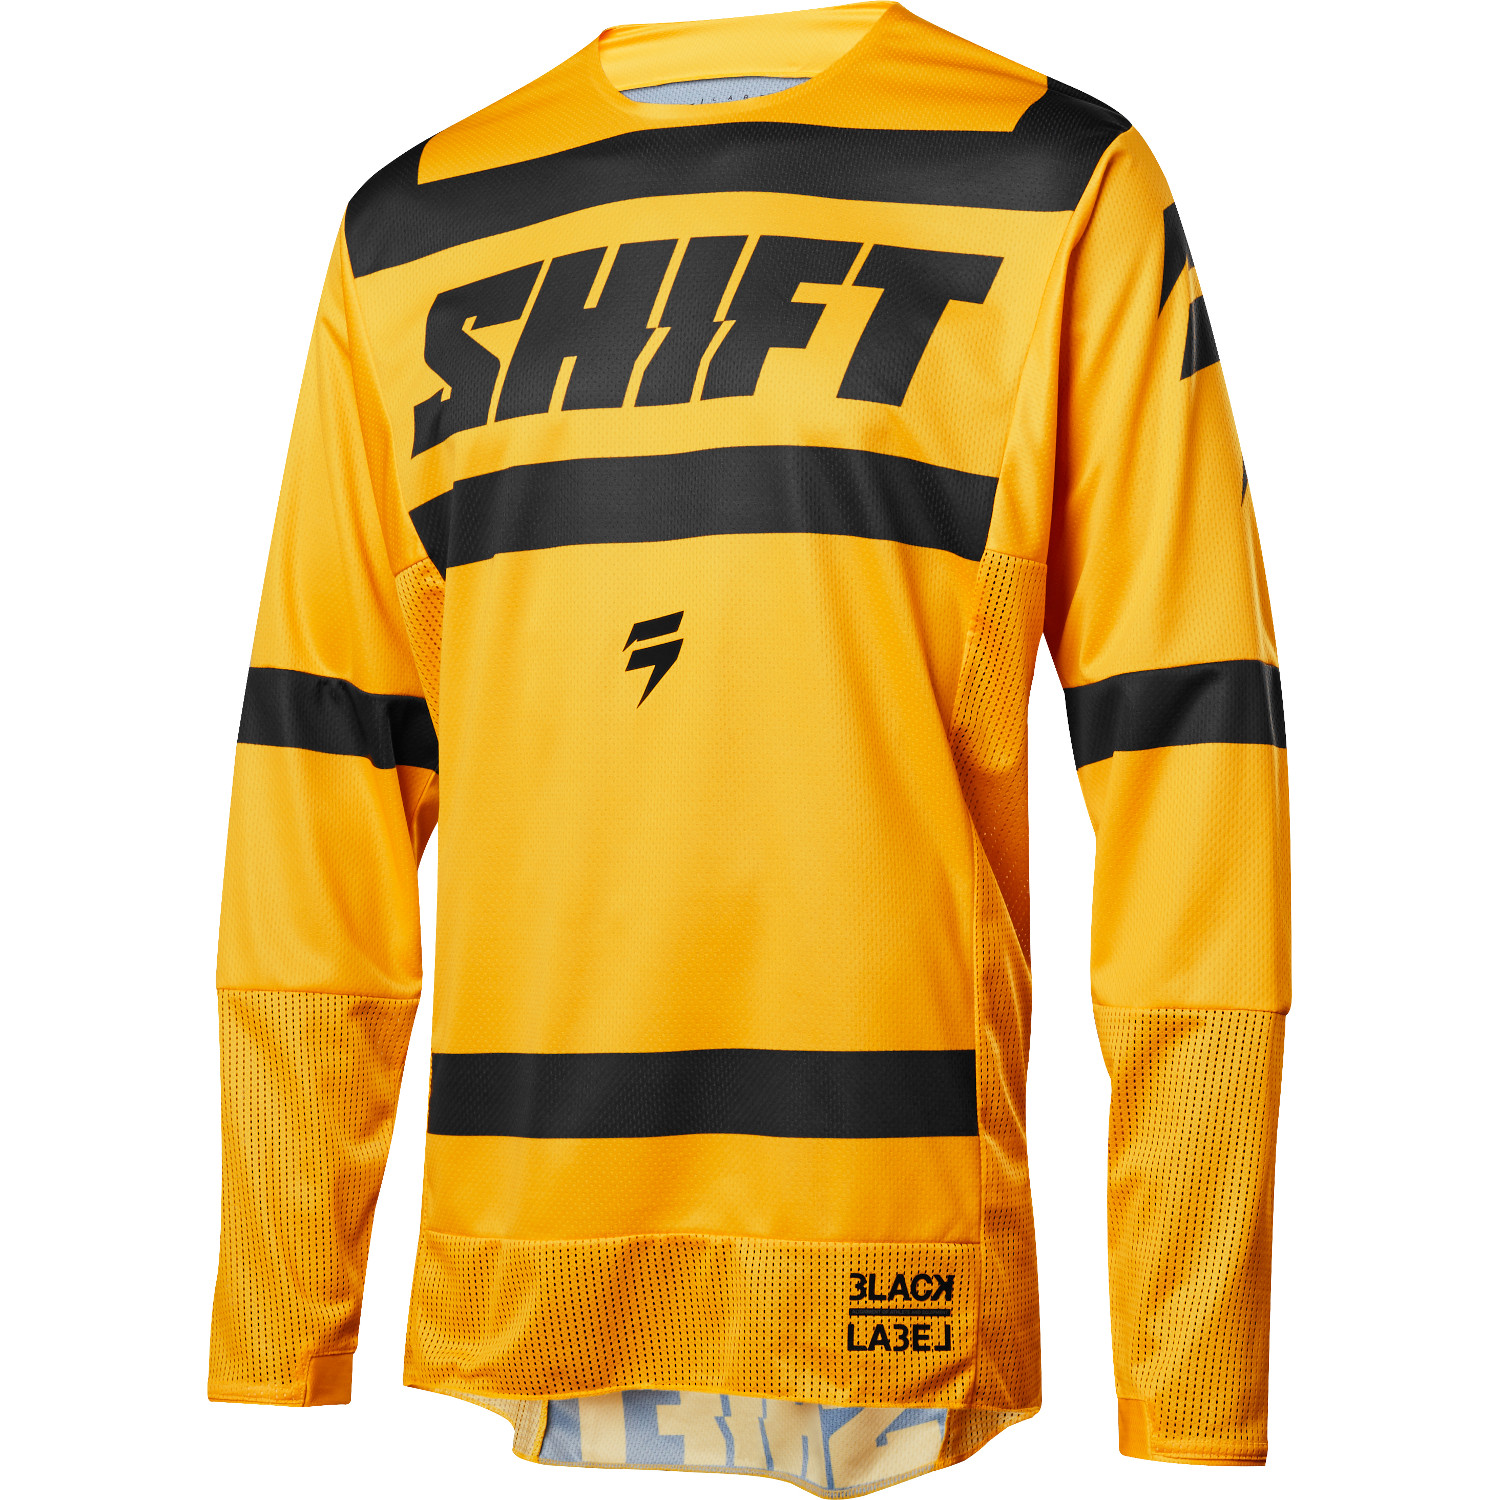 Shift Jersey 3lack Label Strike - Gelb